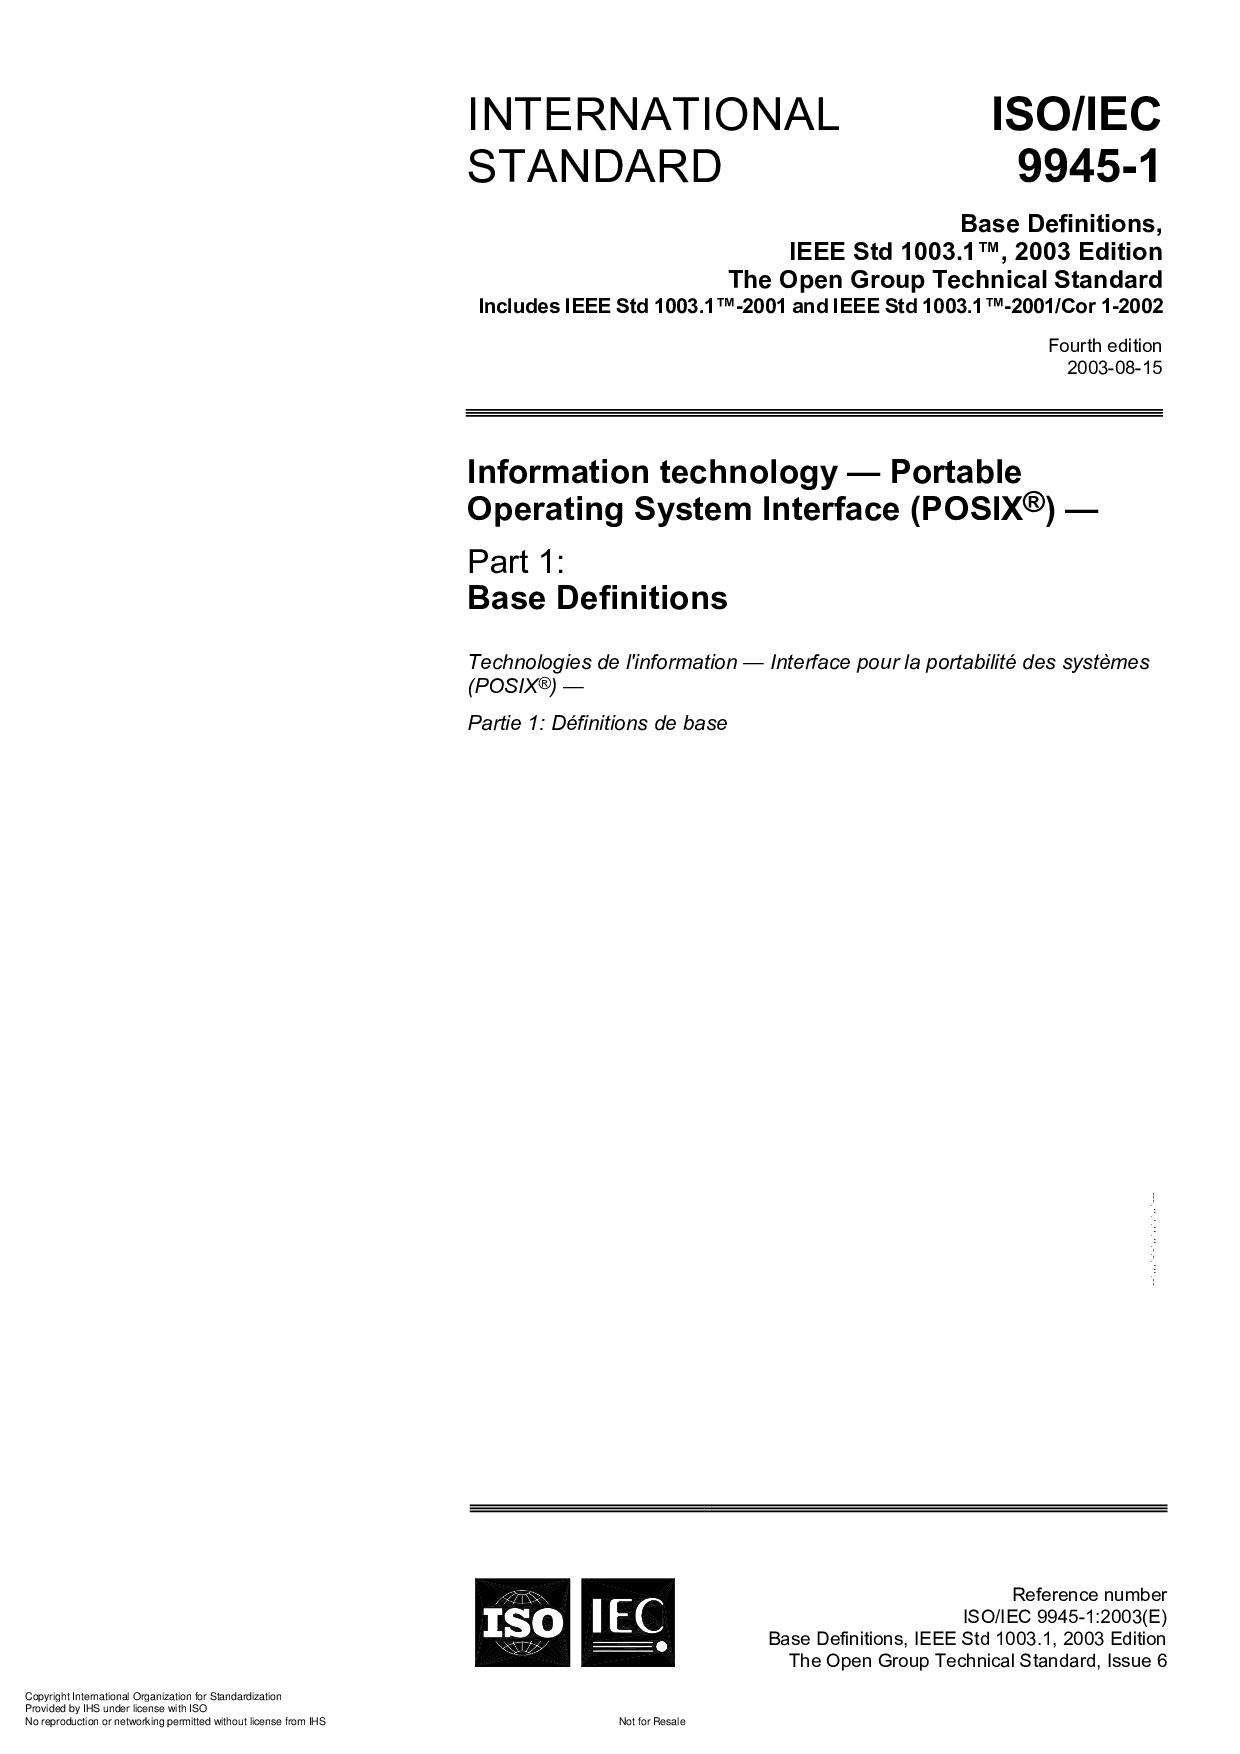 ISO/IEC 9945-1:2003